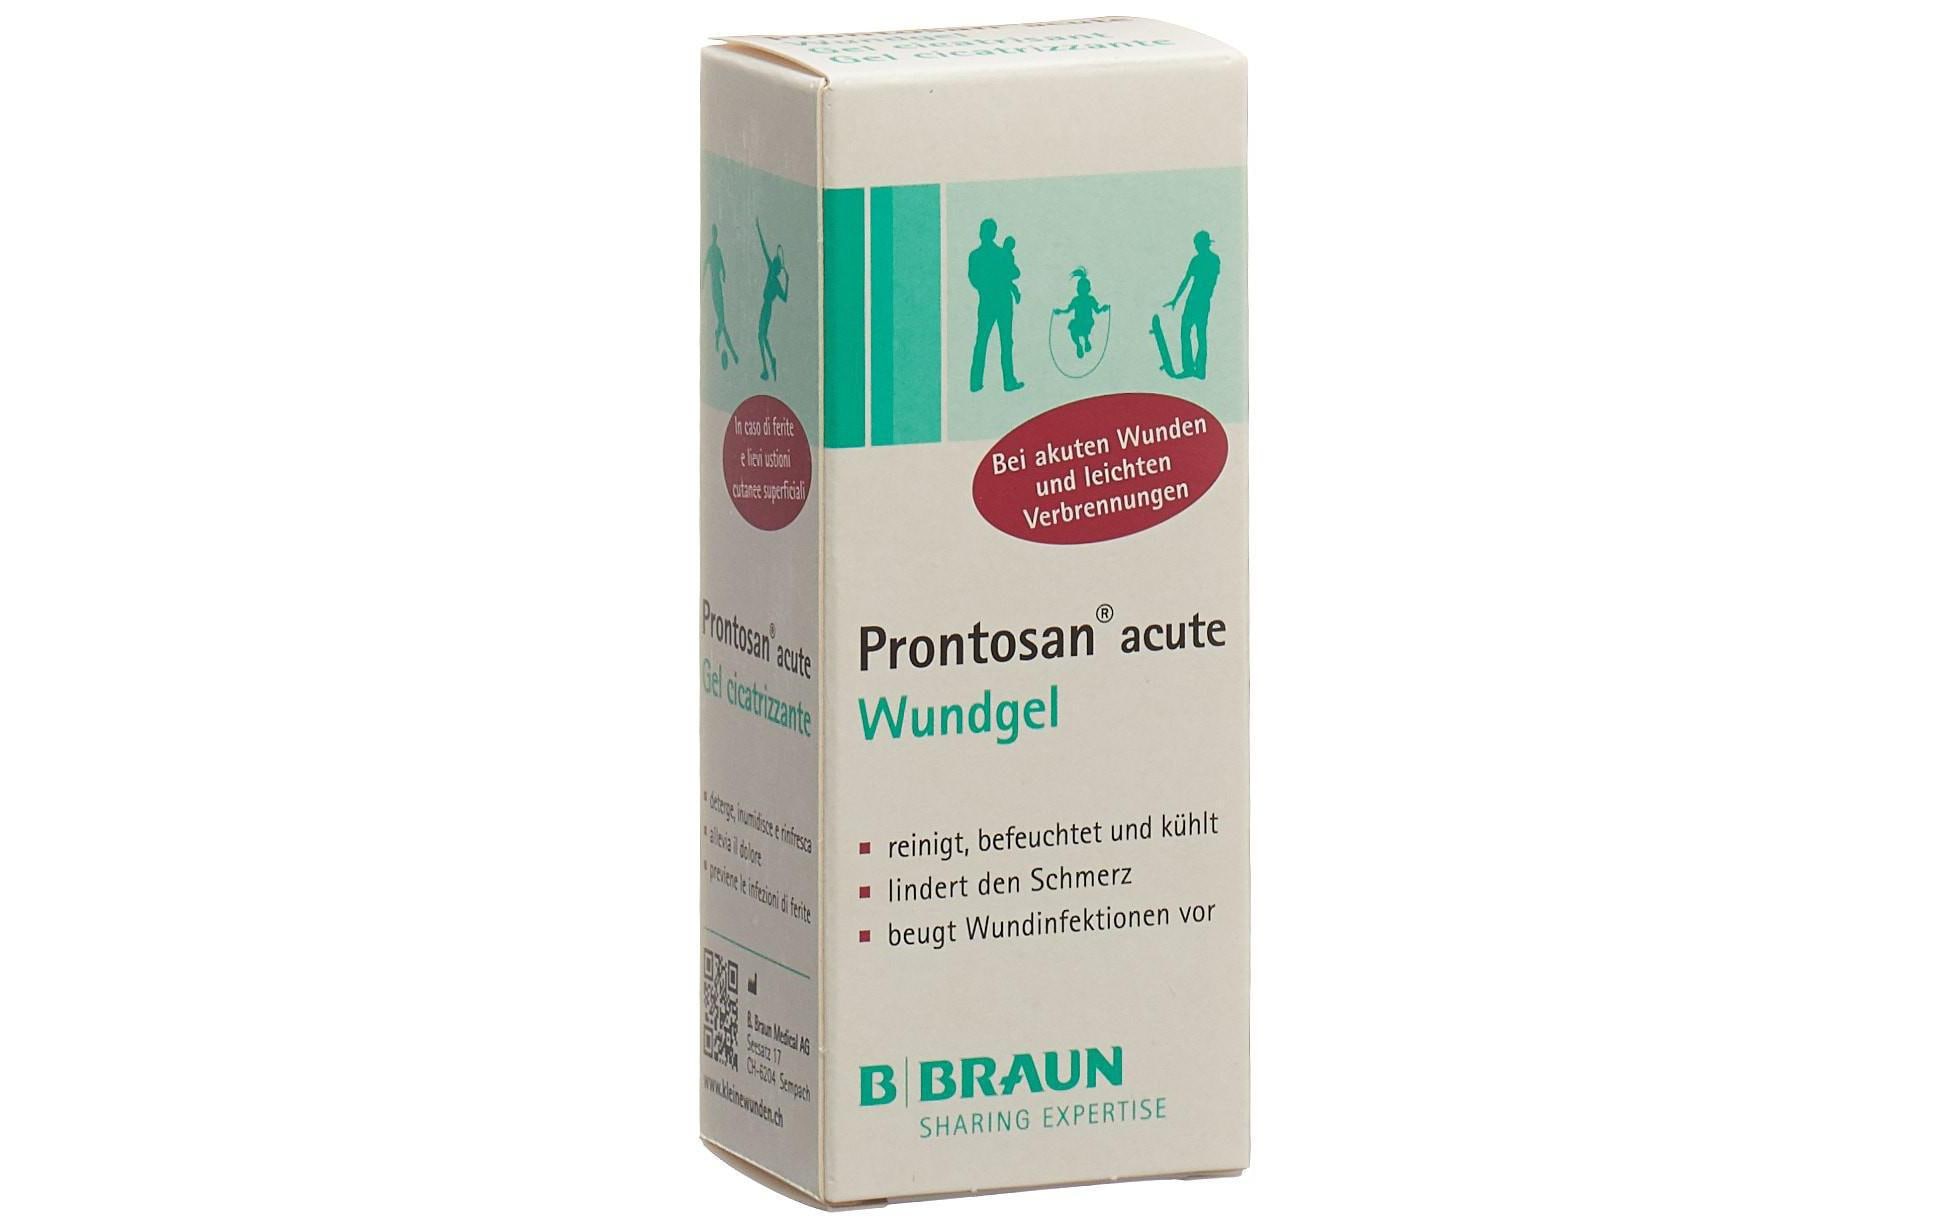 B. Braun Prontosan acute Wundgel 30 g